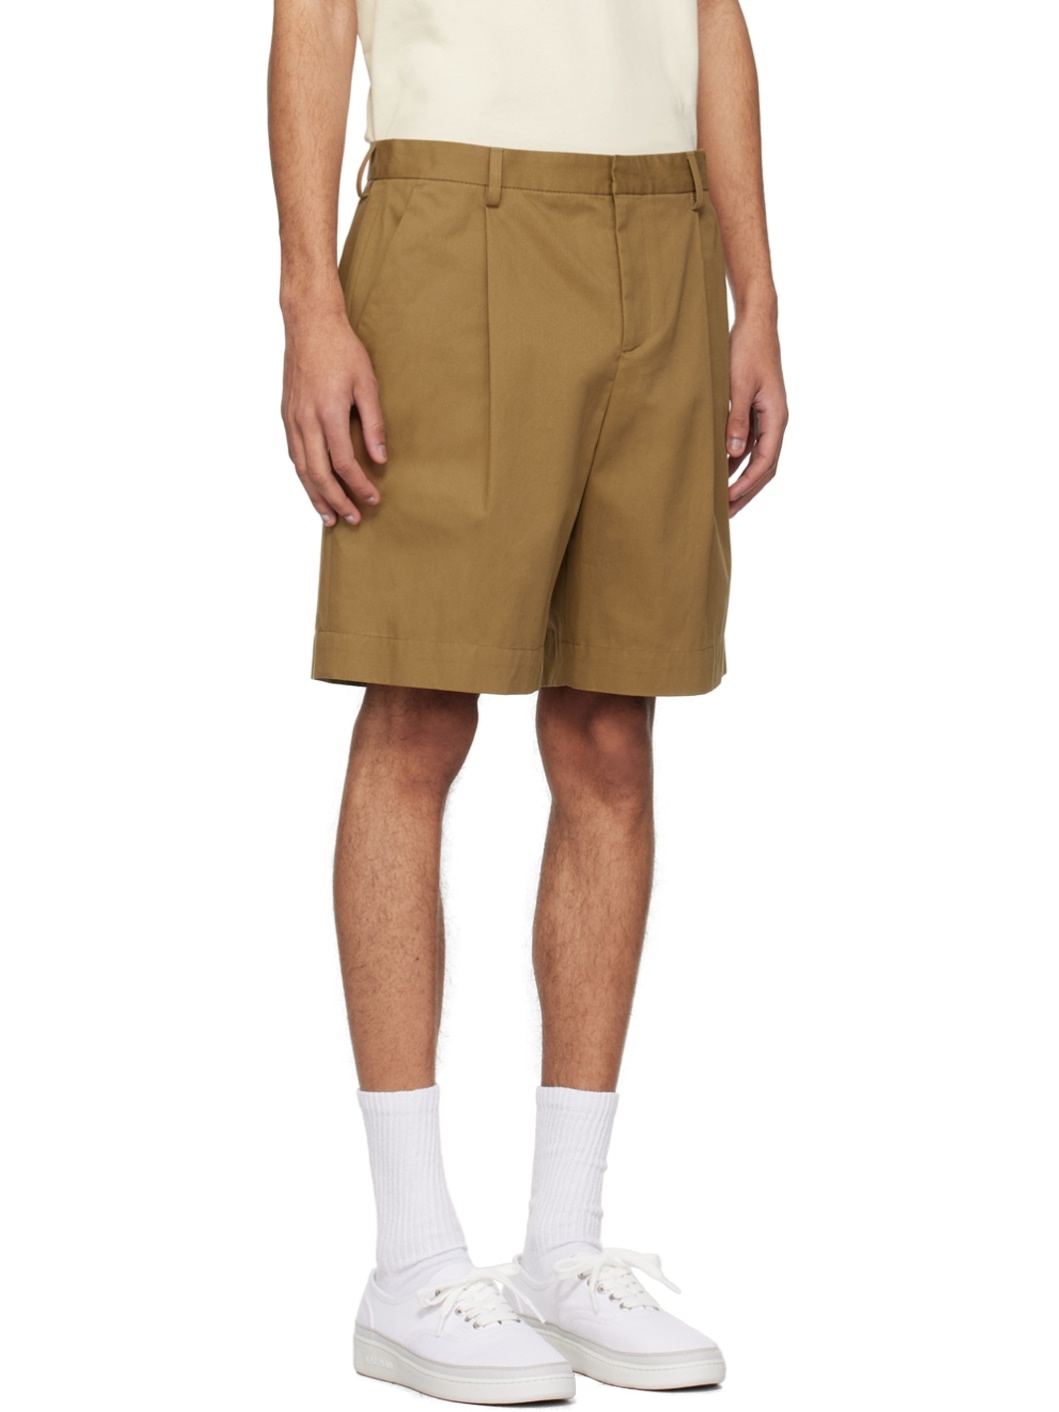 Tan Pleated Shorts - 2